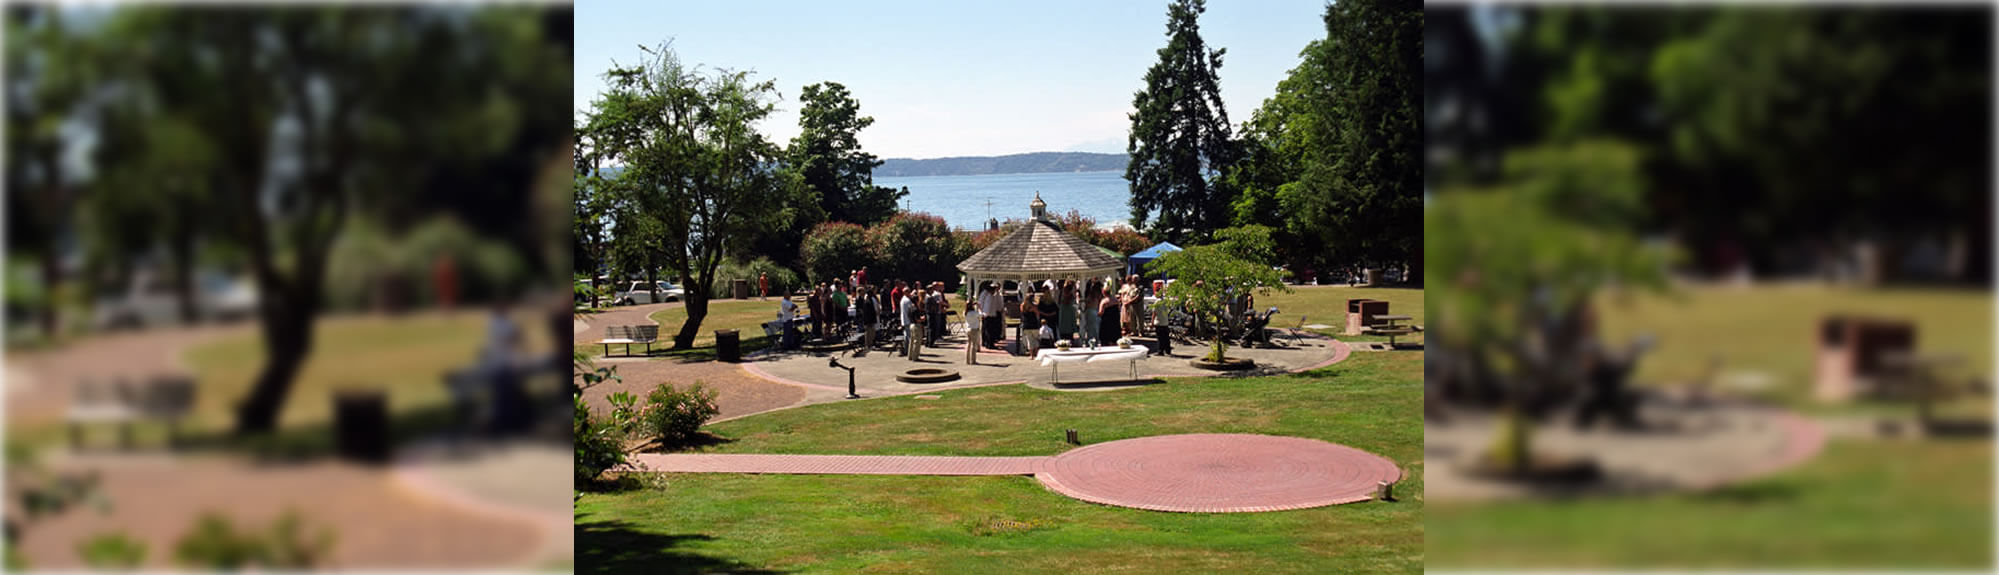 Redondo Wooten Park Gazebo - Wedding Seattle Southside Regional Tourism Authority Des Moines WA